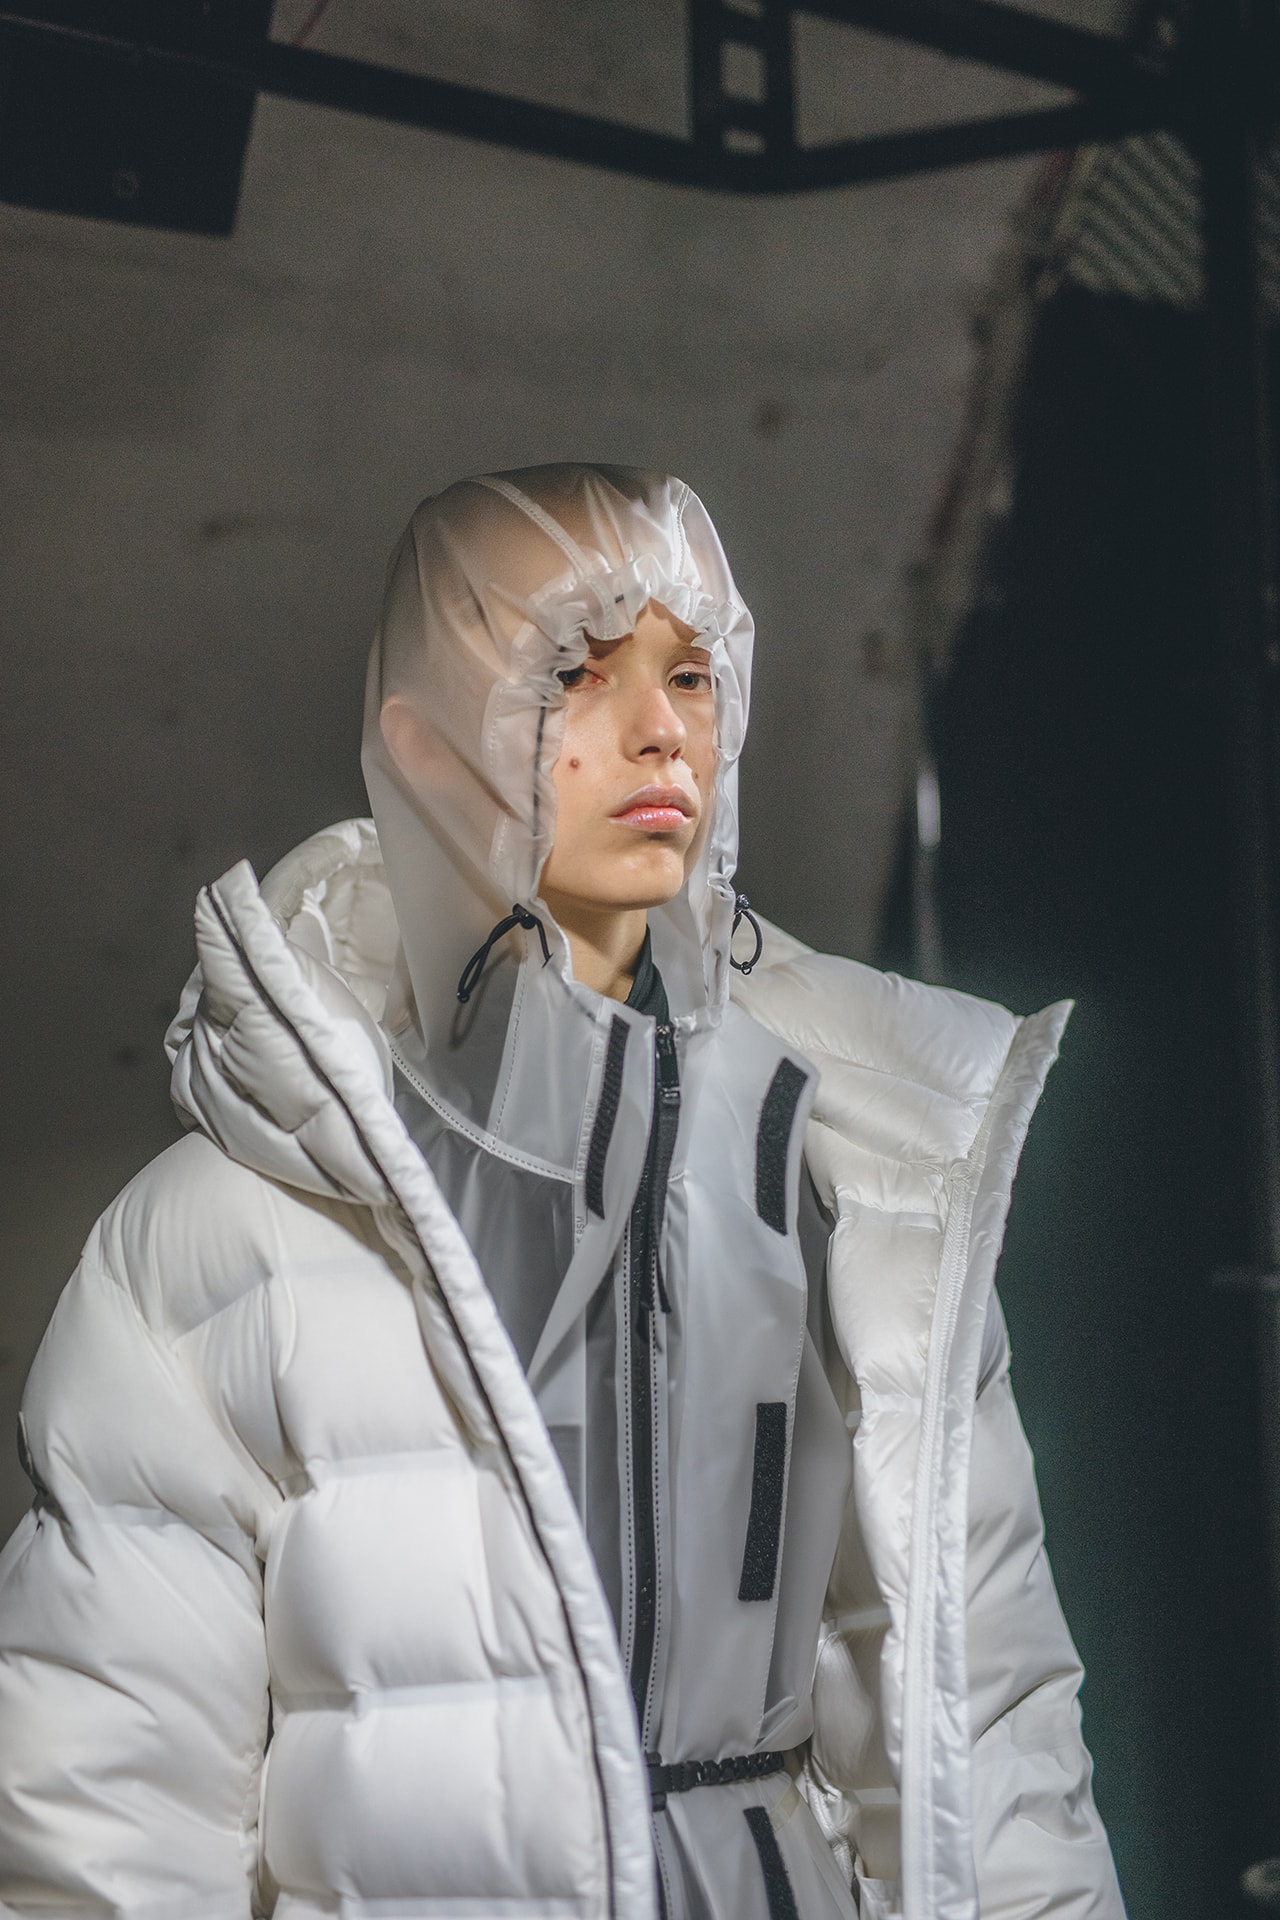 moncler genius milan fashion week presentation alyx matthew williams collaboration white jacket